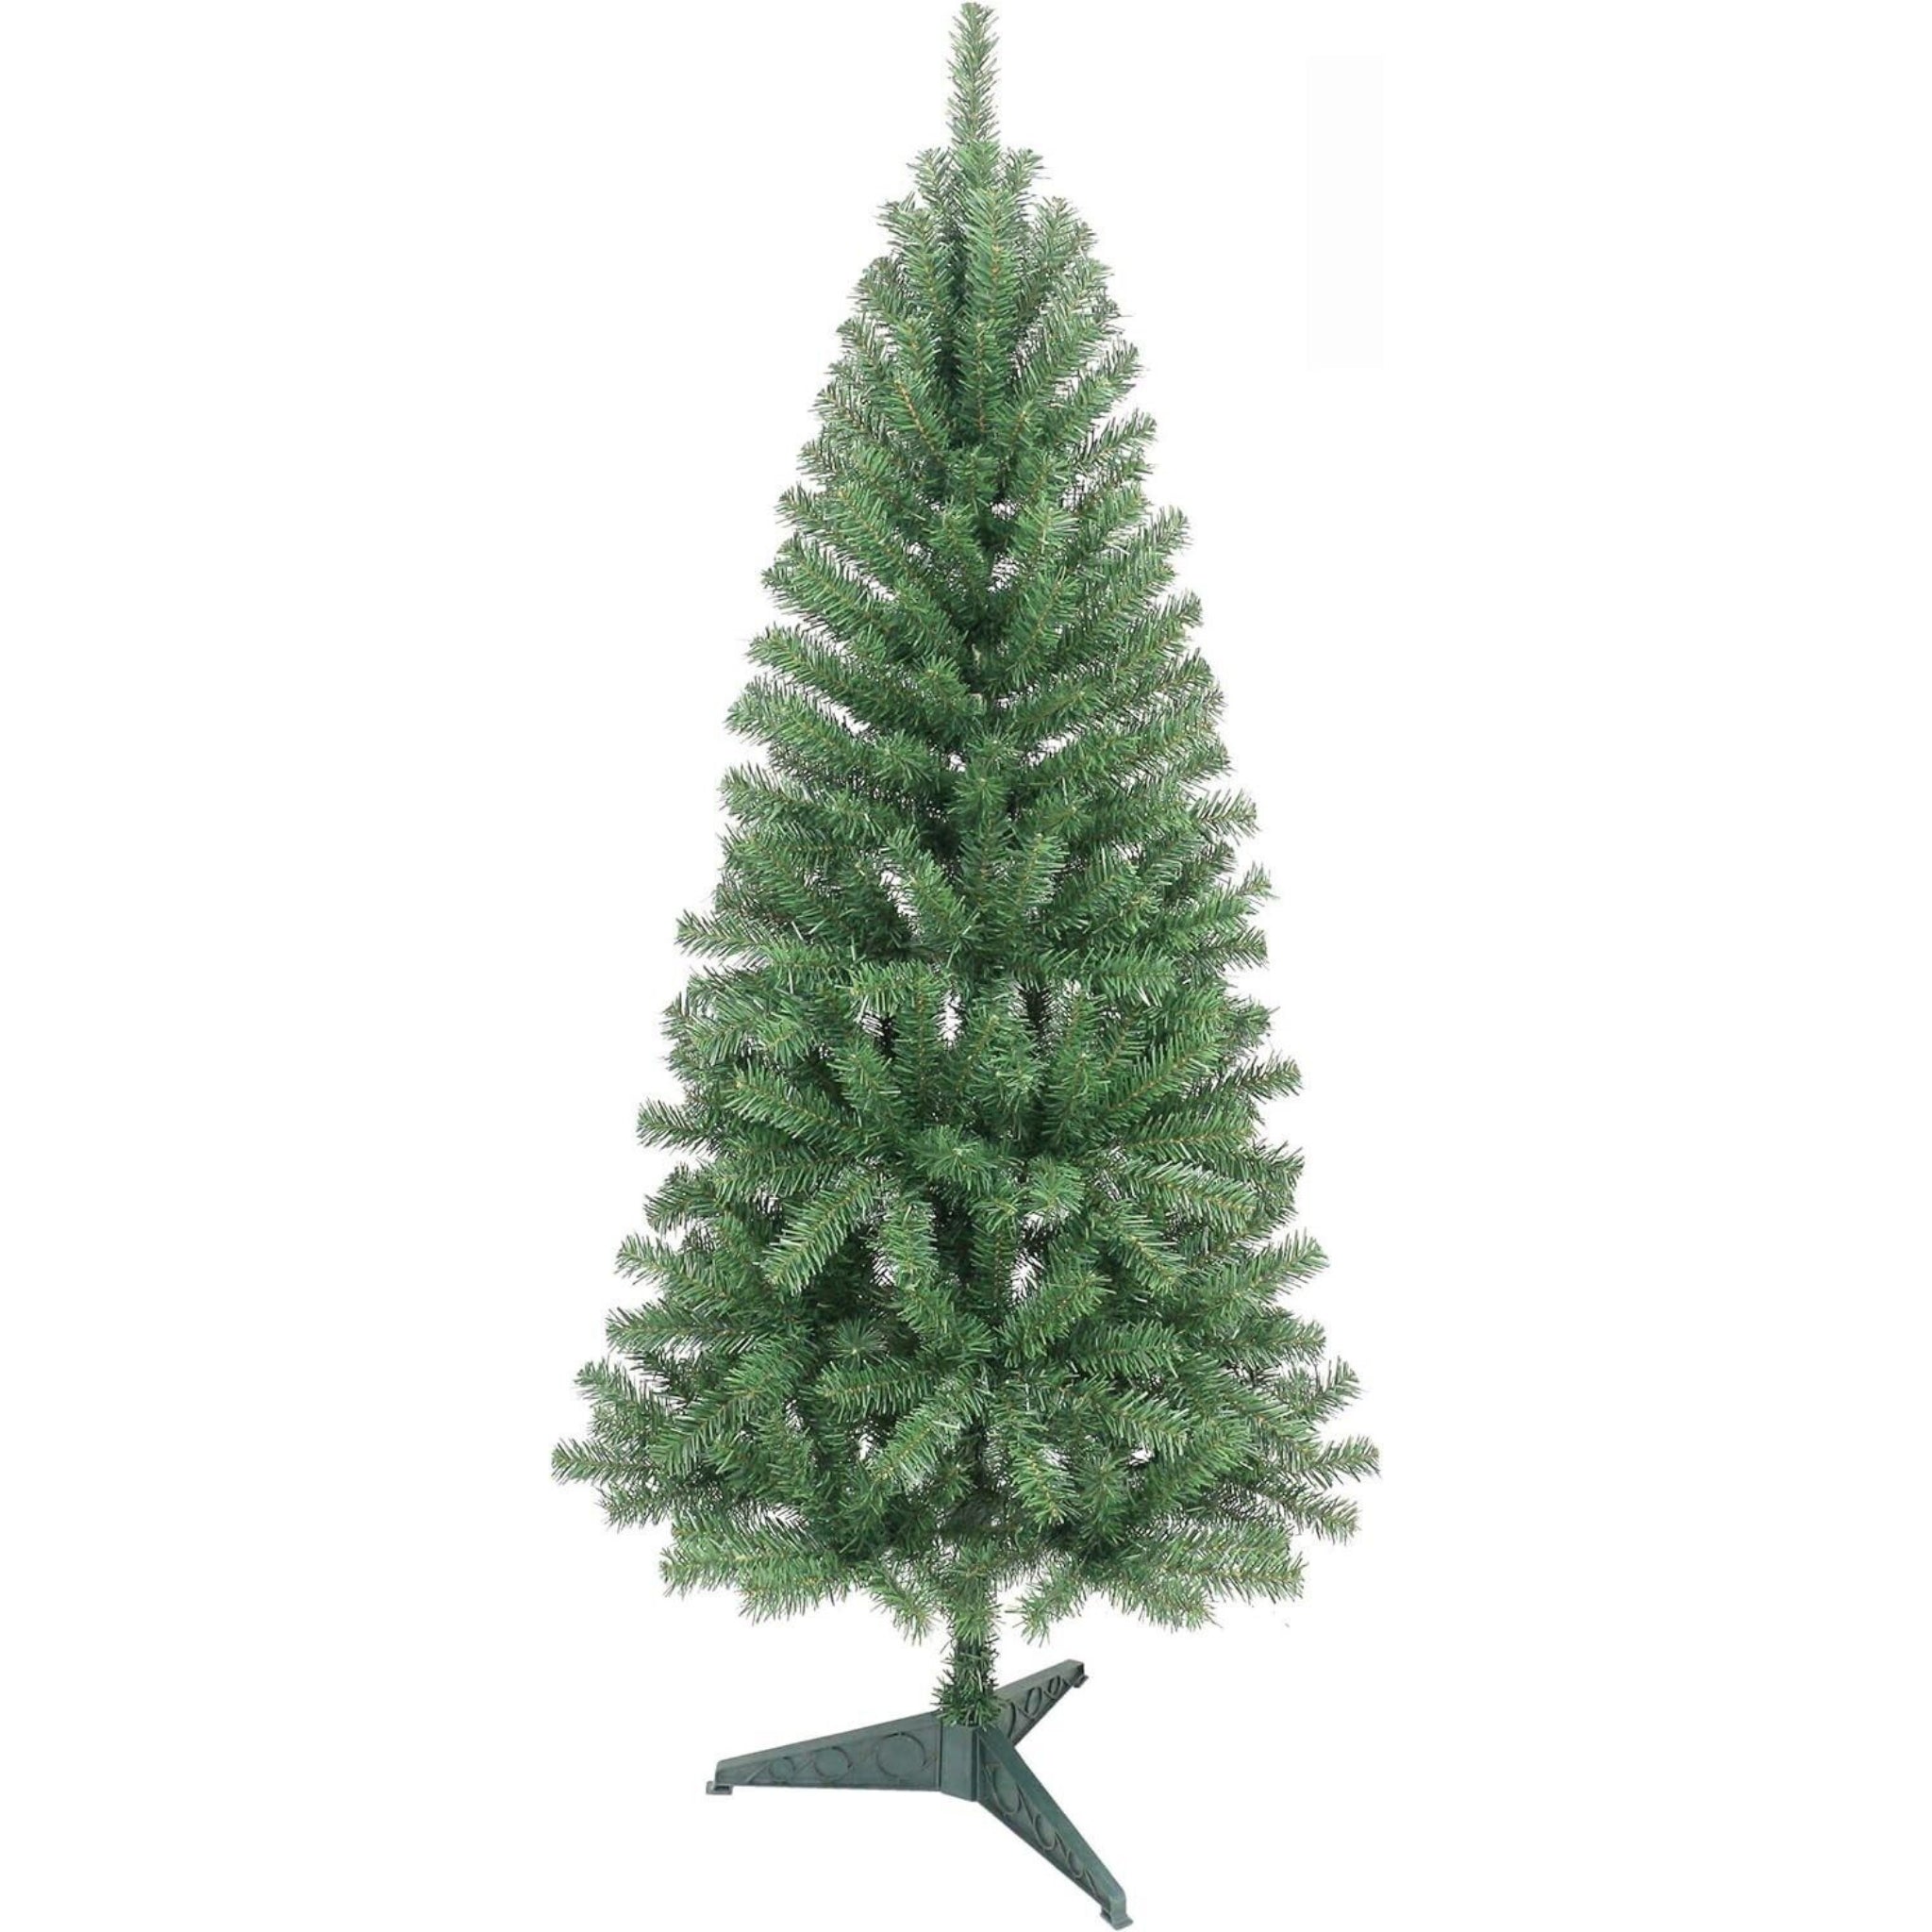 Beclen Harp 6FT Christmas/Xmas Artificial Fiber Optics Bushy Pine Green Decoration Tree-Perfect Christmas/Xmas Decor